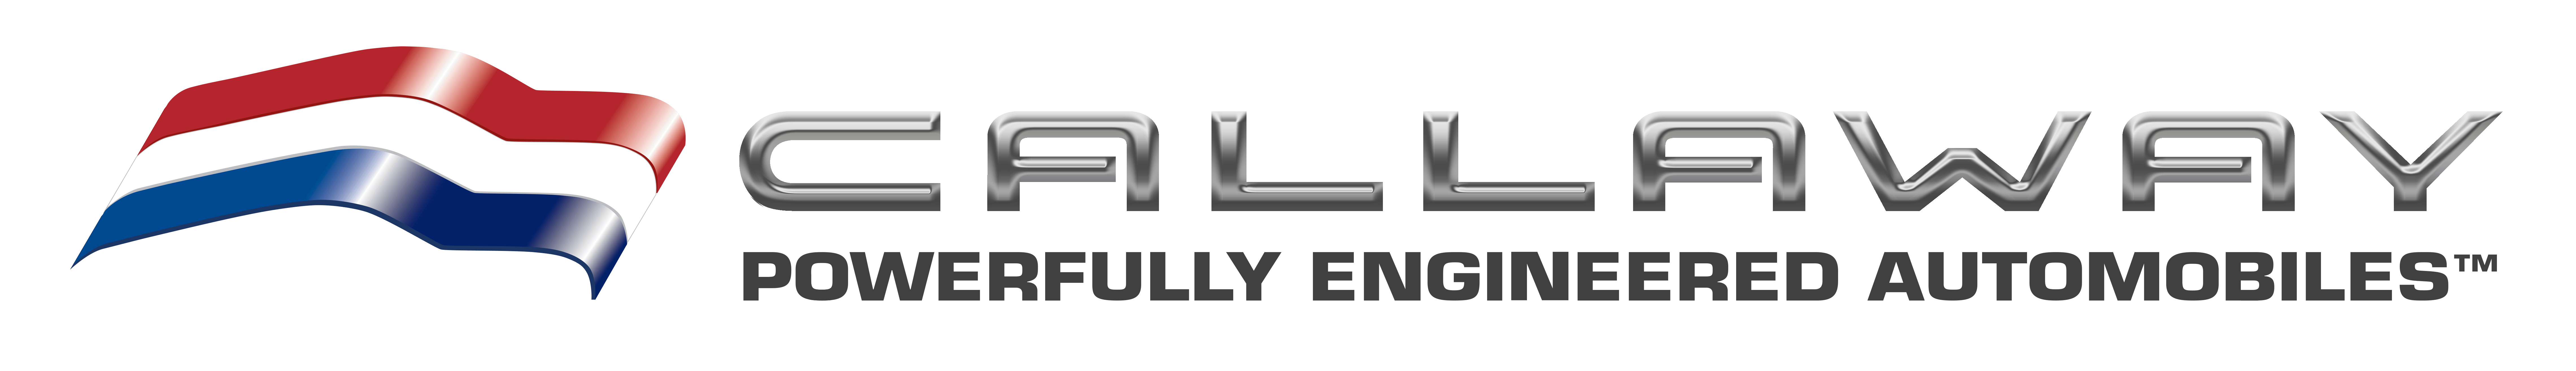 Callaway Logo - HOMEPAGE Callaway Cars produces specialty vehicles, engineering ...